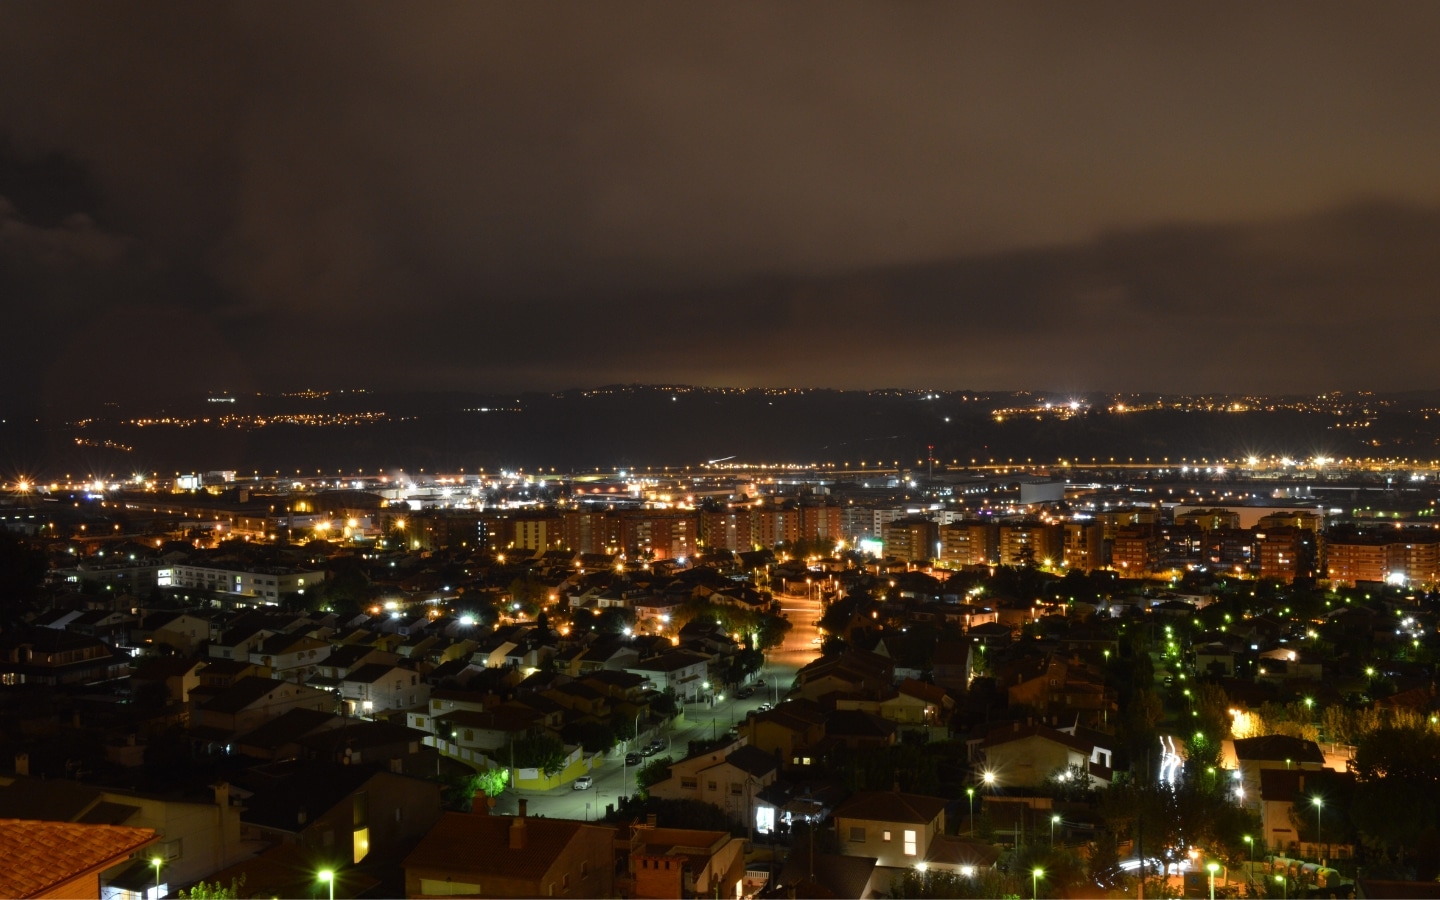 Sant Andreu district at night